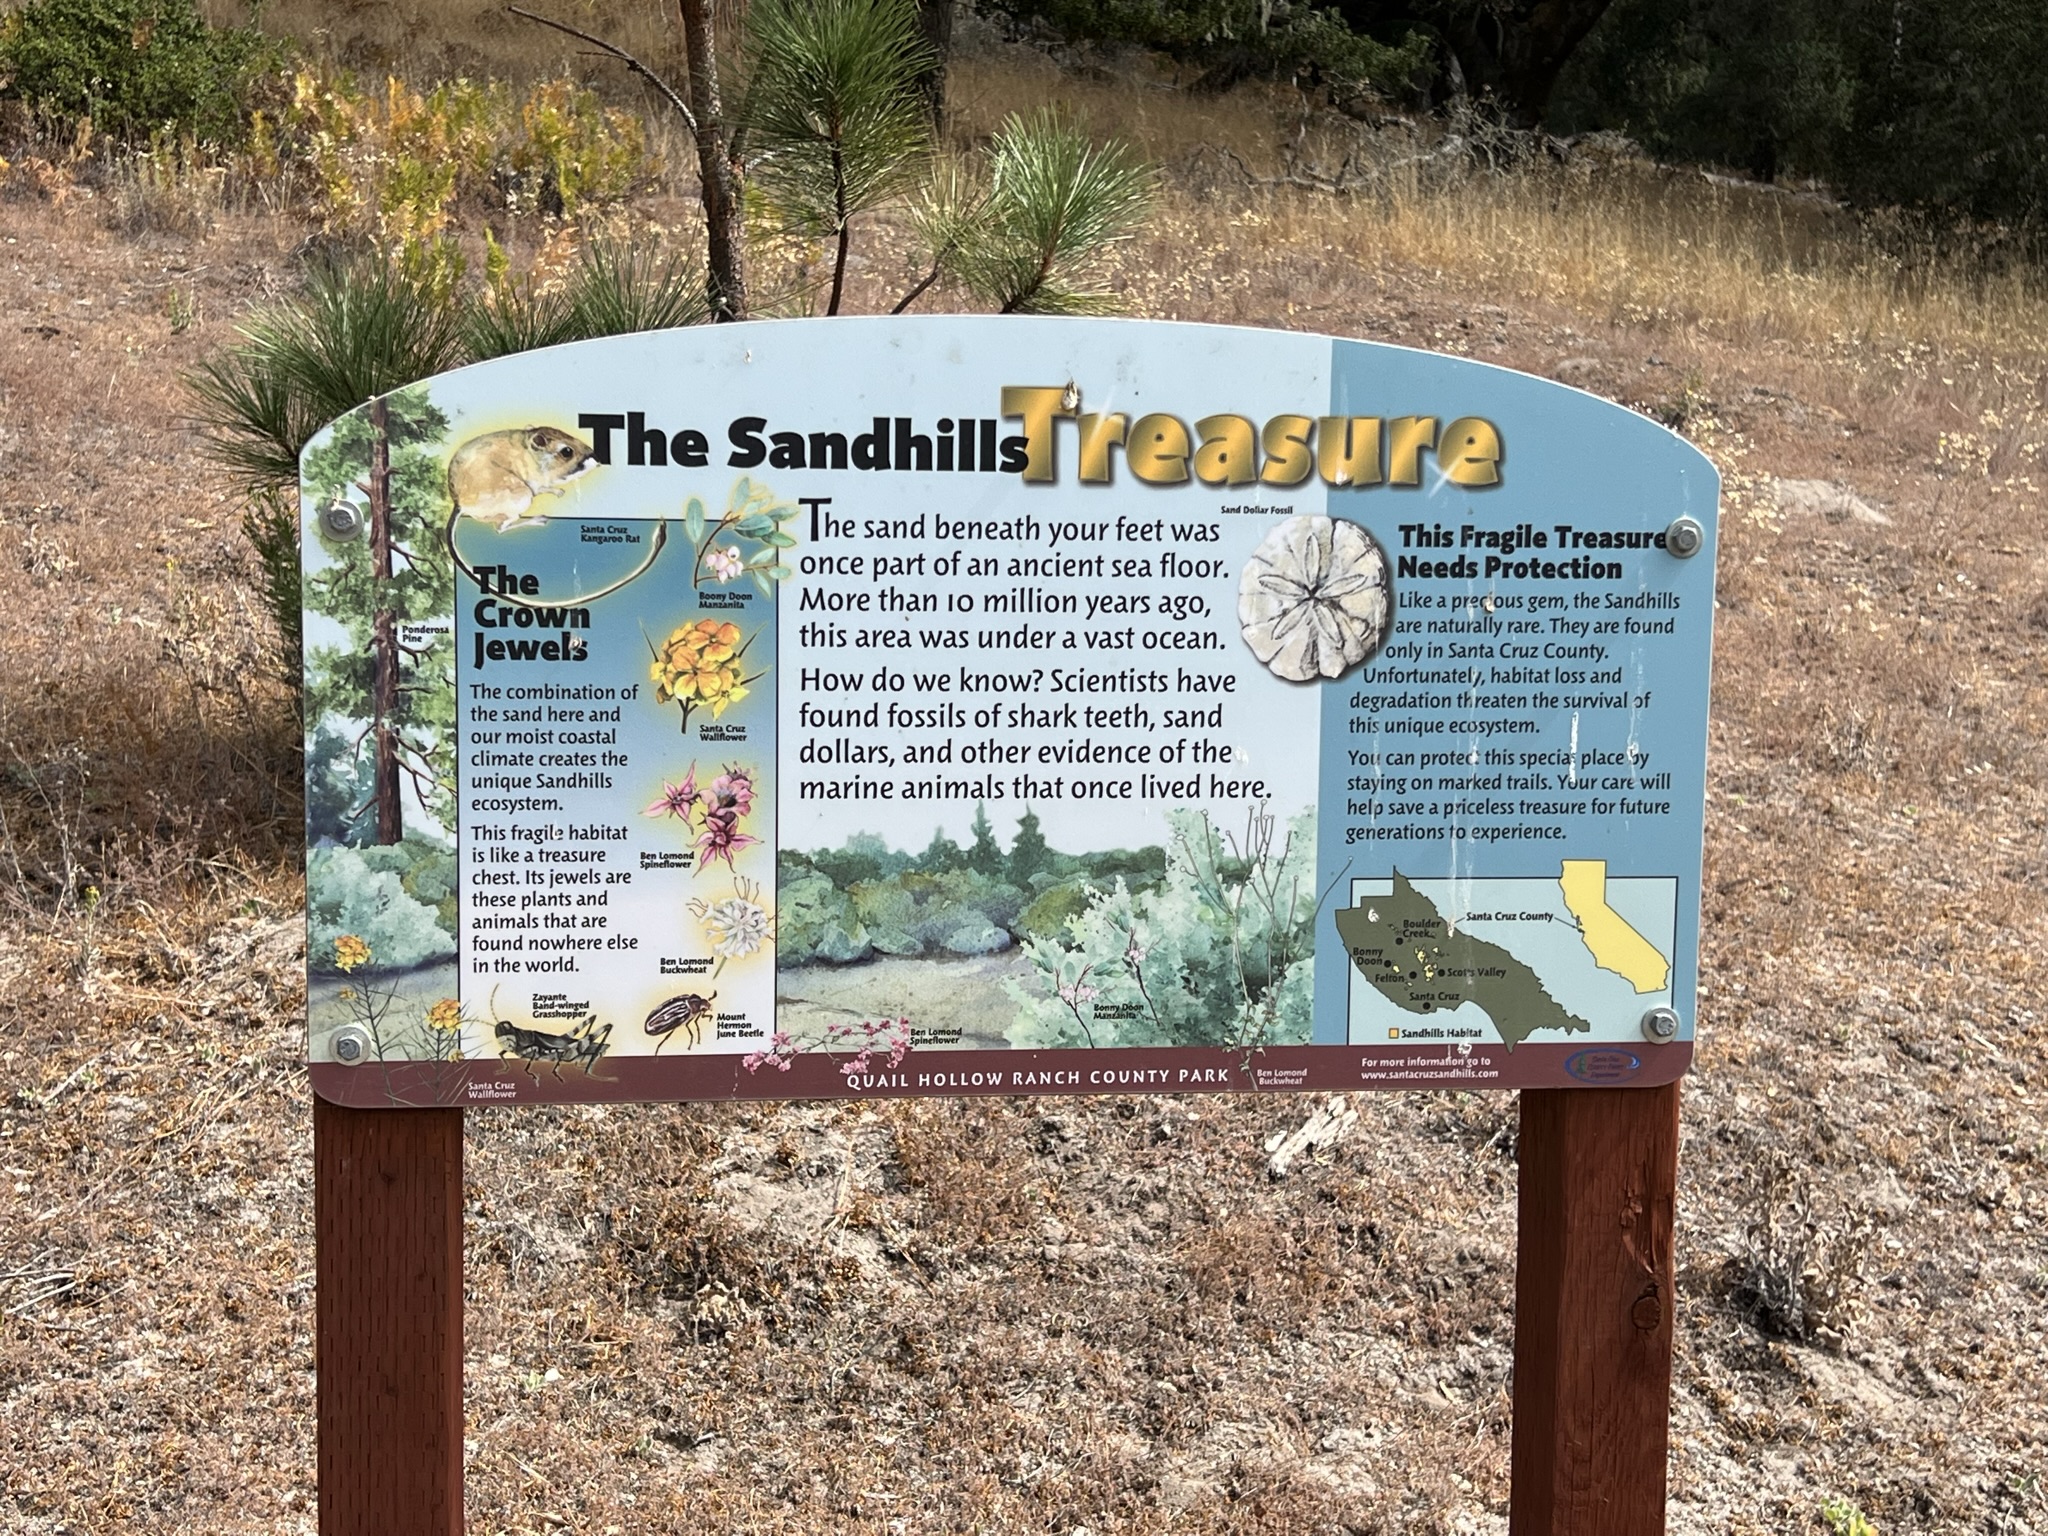 Sandhills 只在 Santa Cruz County 有，原来山上全是沙子的原因是这里在 1000 万年前原来是海床，根本不是什么人工沙